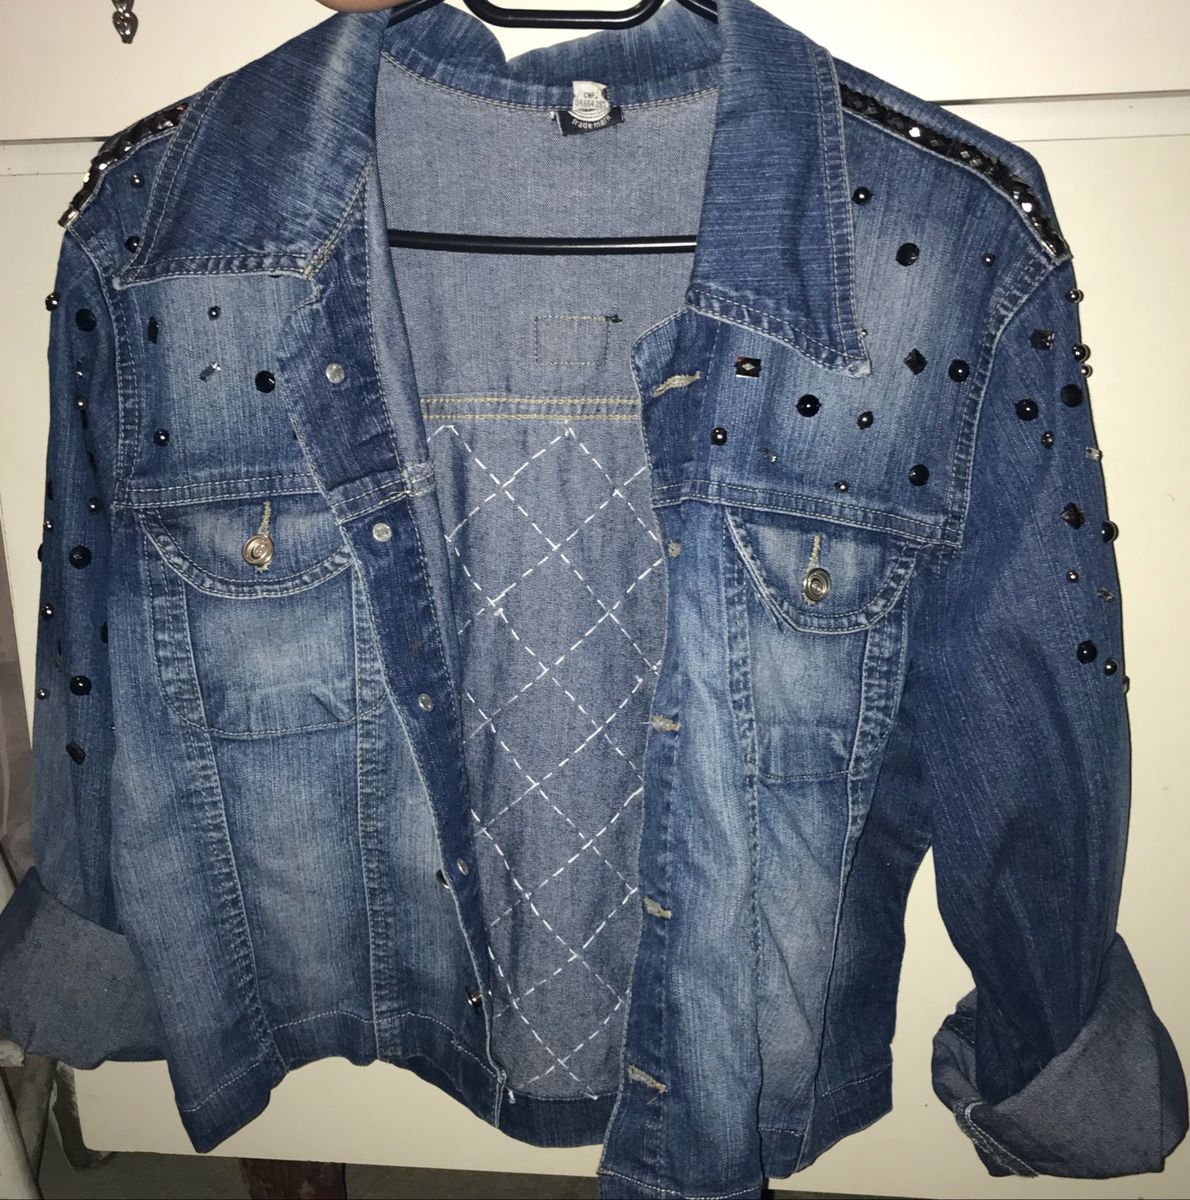 jaqueta jeans customizada com pedrarias